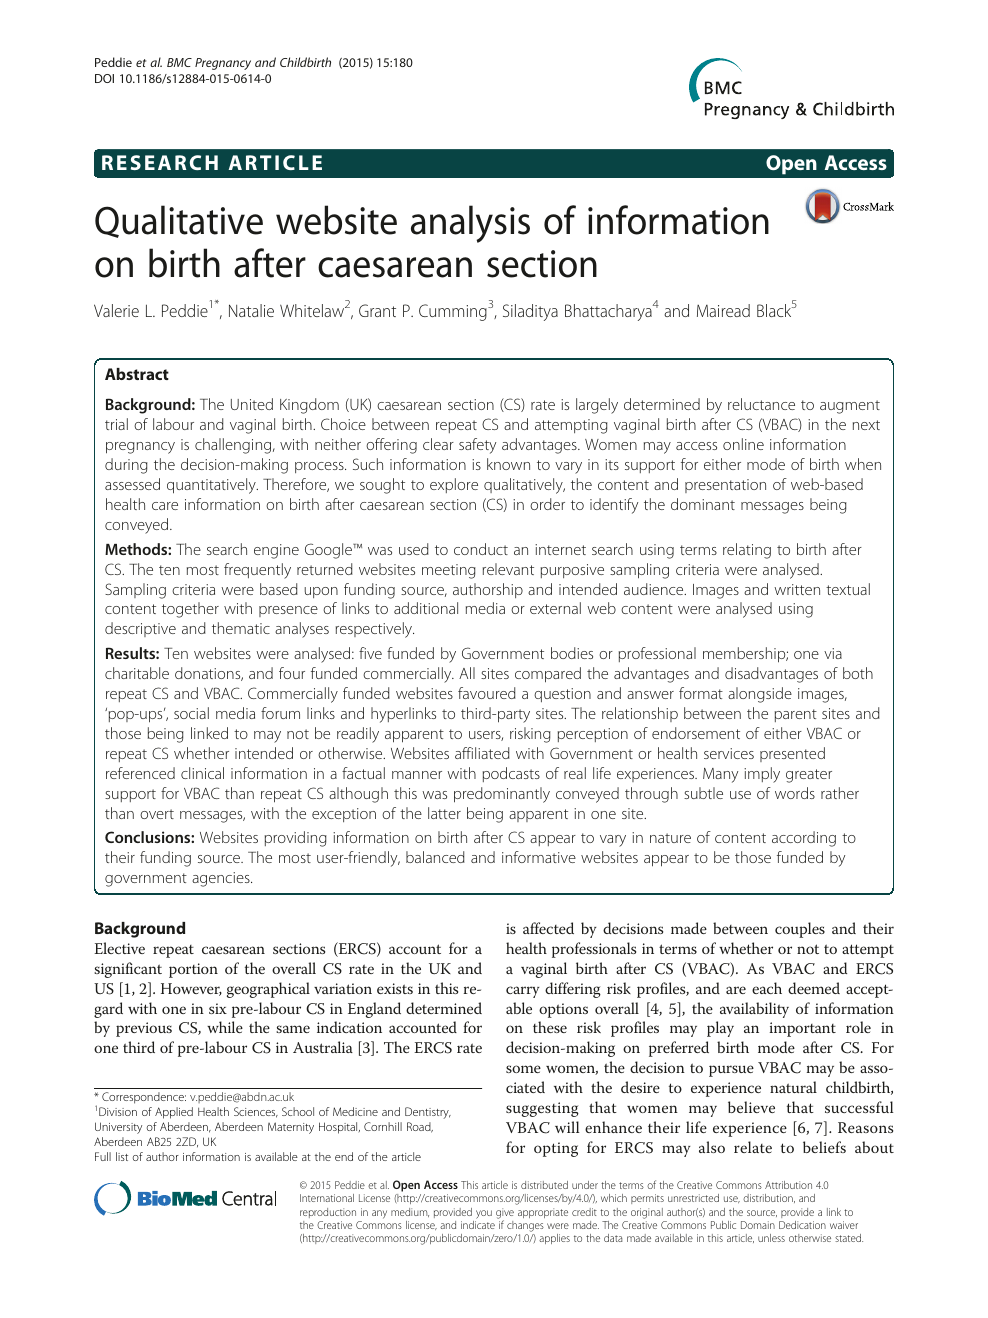 website analysis paper